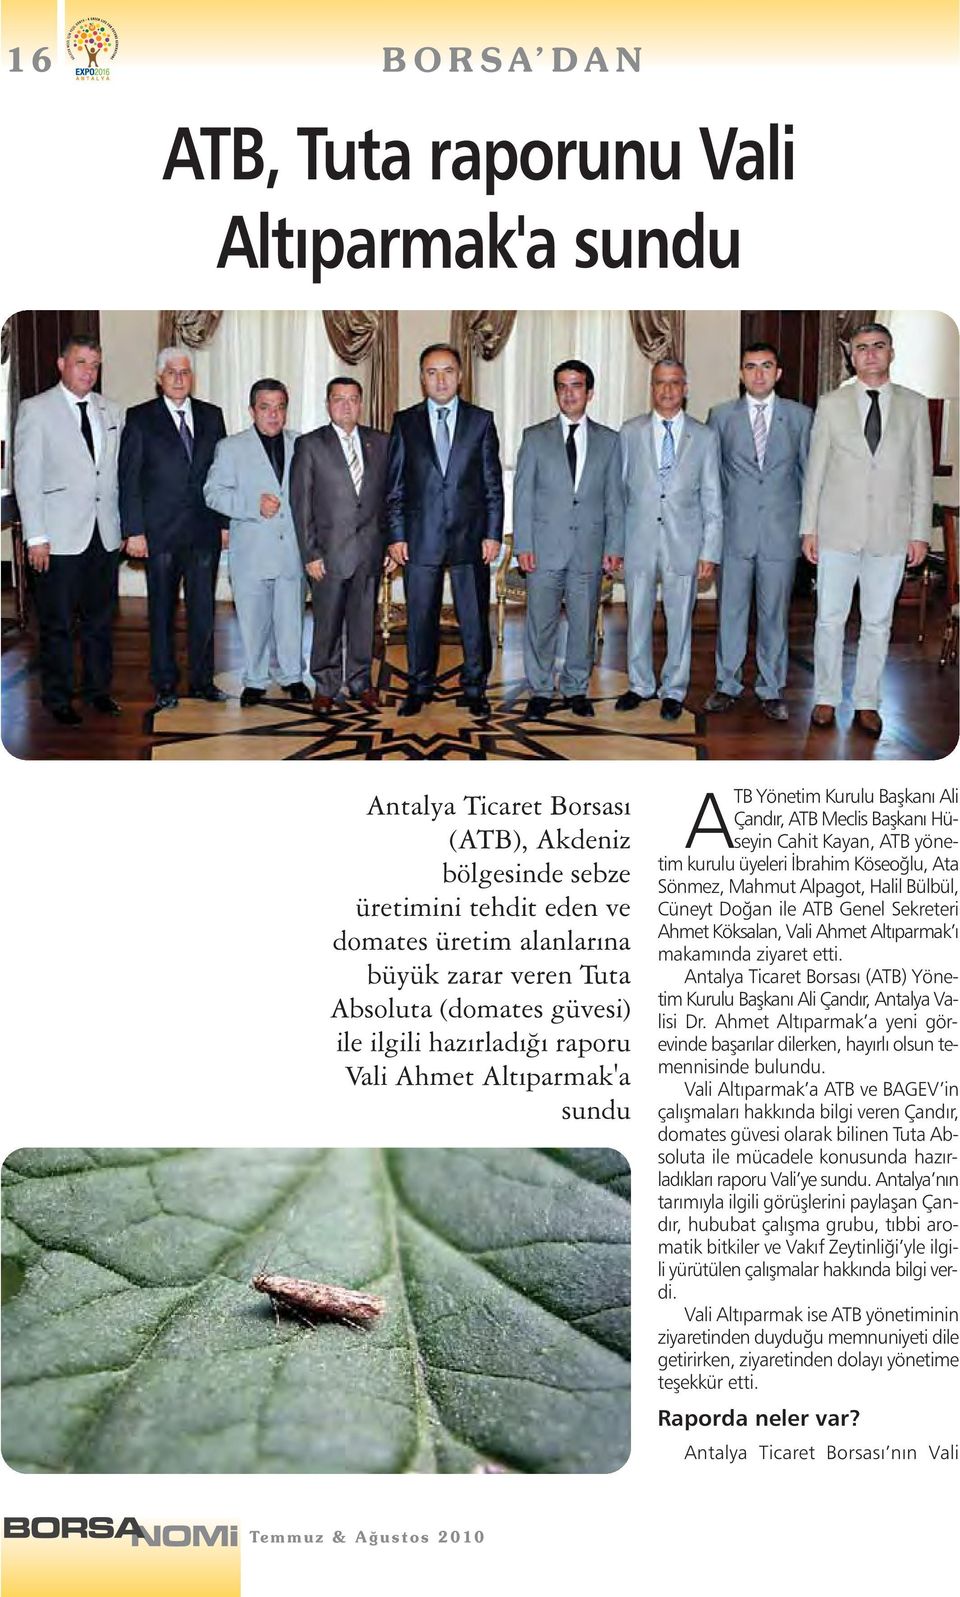 Köseoğlu, Ata Sönmez, Mahmut Alpagot, Halil Bülbül, Cüneyt Doğan ile ATB Genel Sekreteri Ahmet Köksalan, Vali Ahmet Altıparmak ı makamında ziyaret etti.